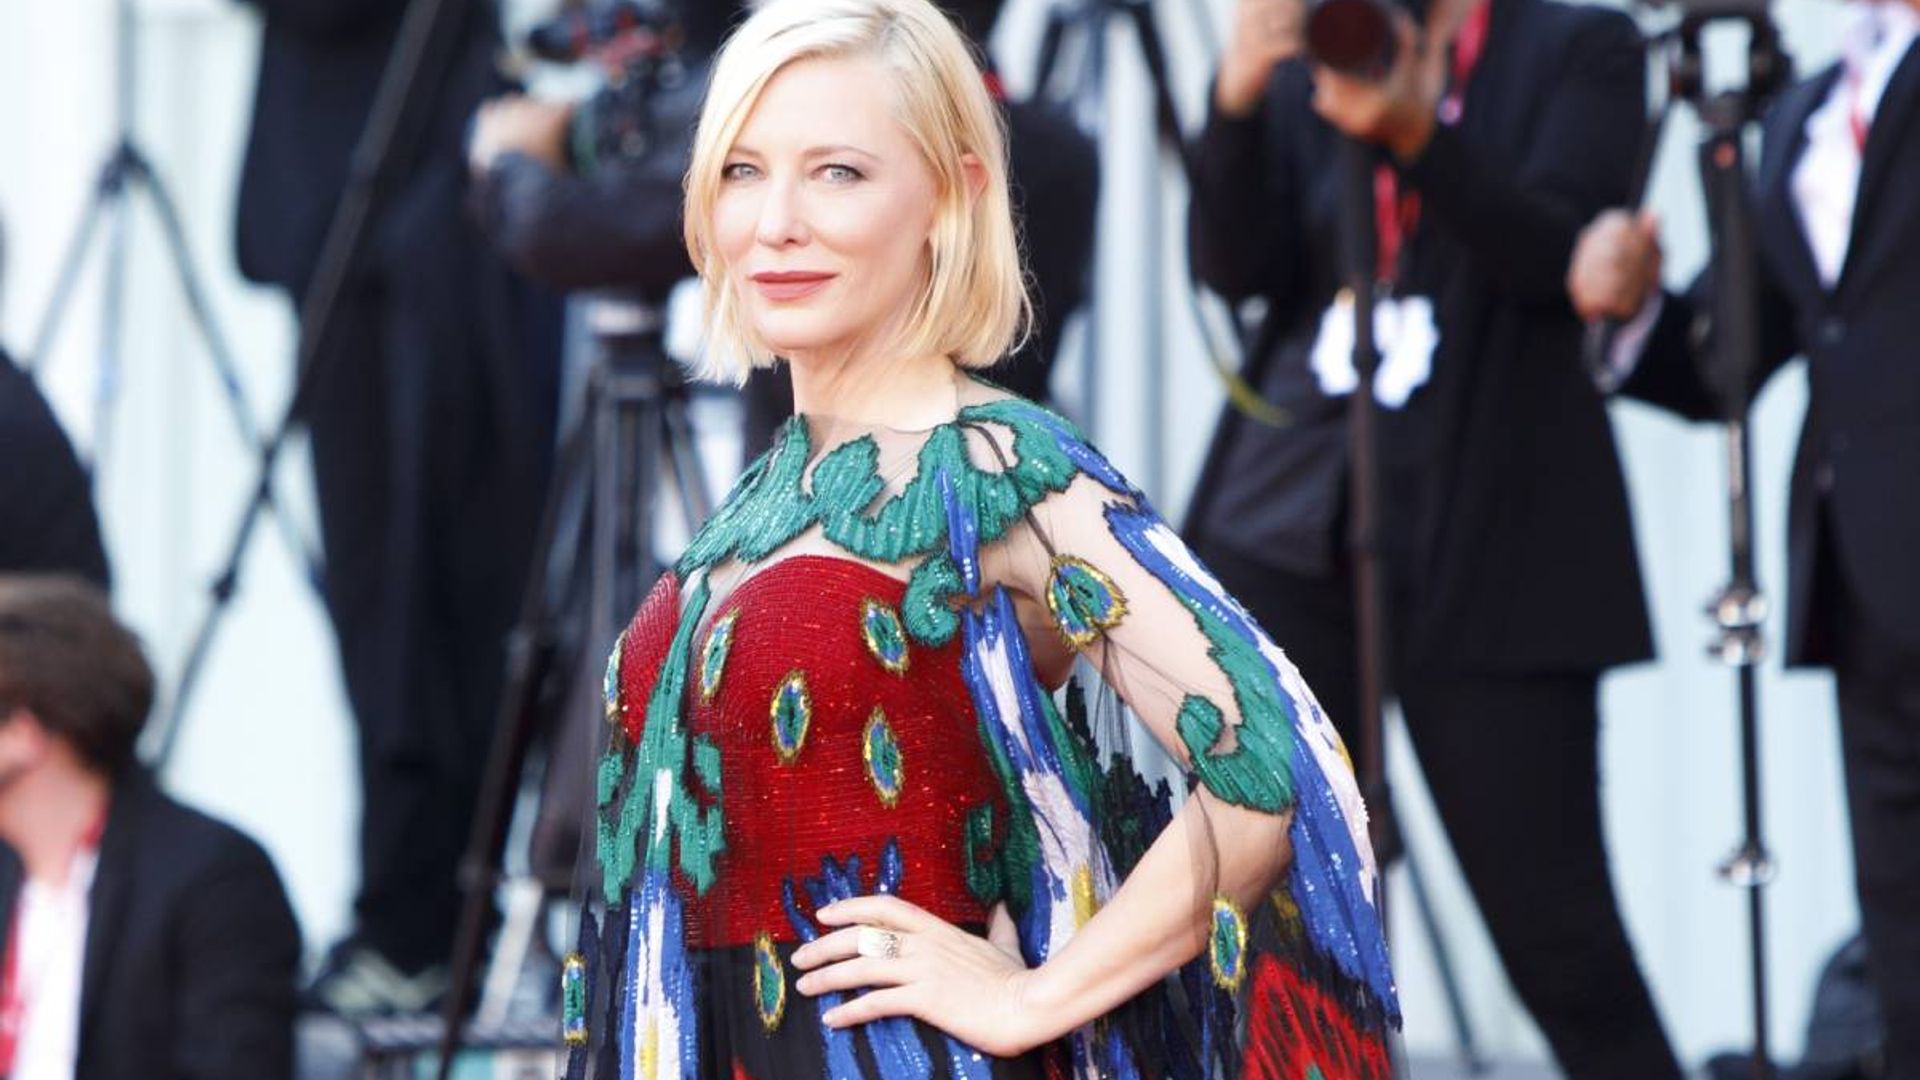 Cate Blanchett looks like a goddess in the dreamiest LBD